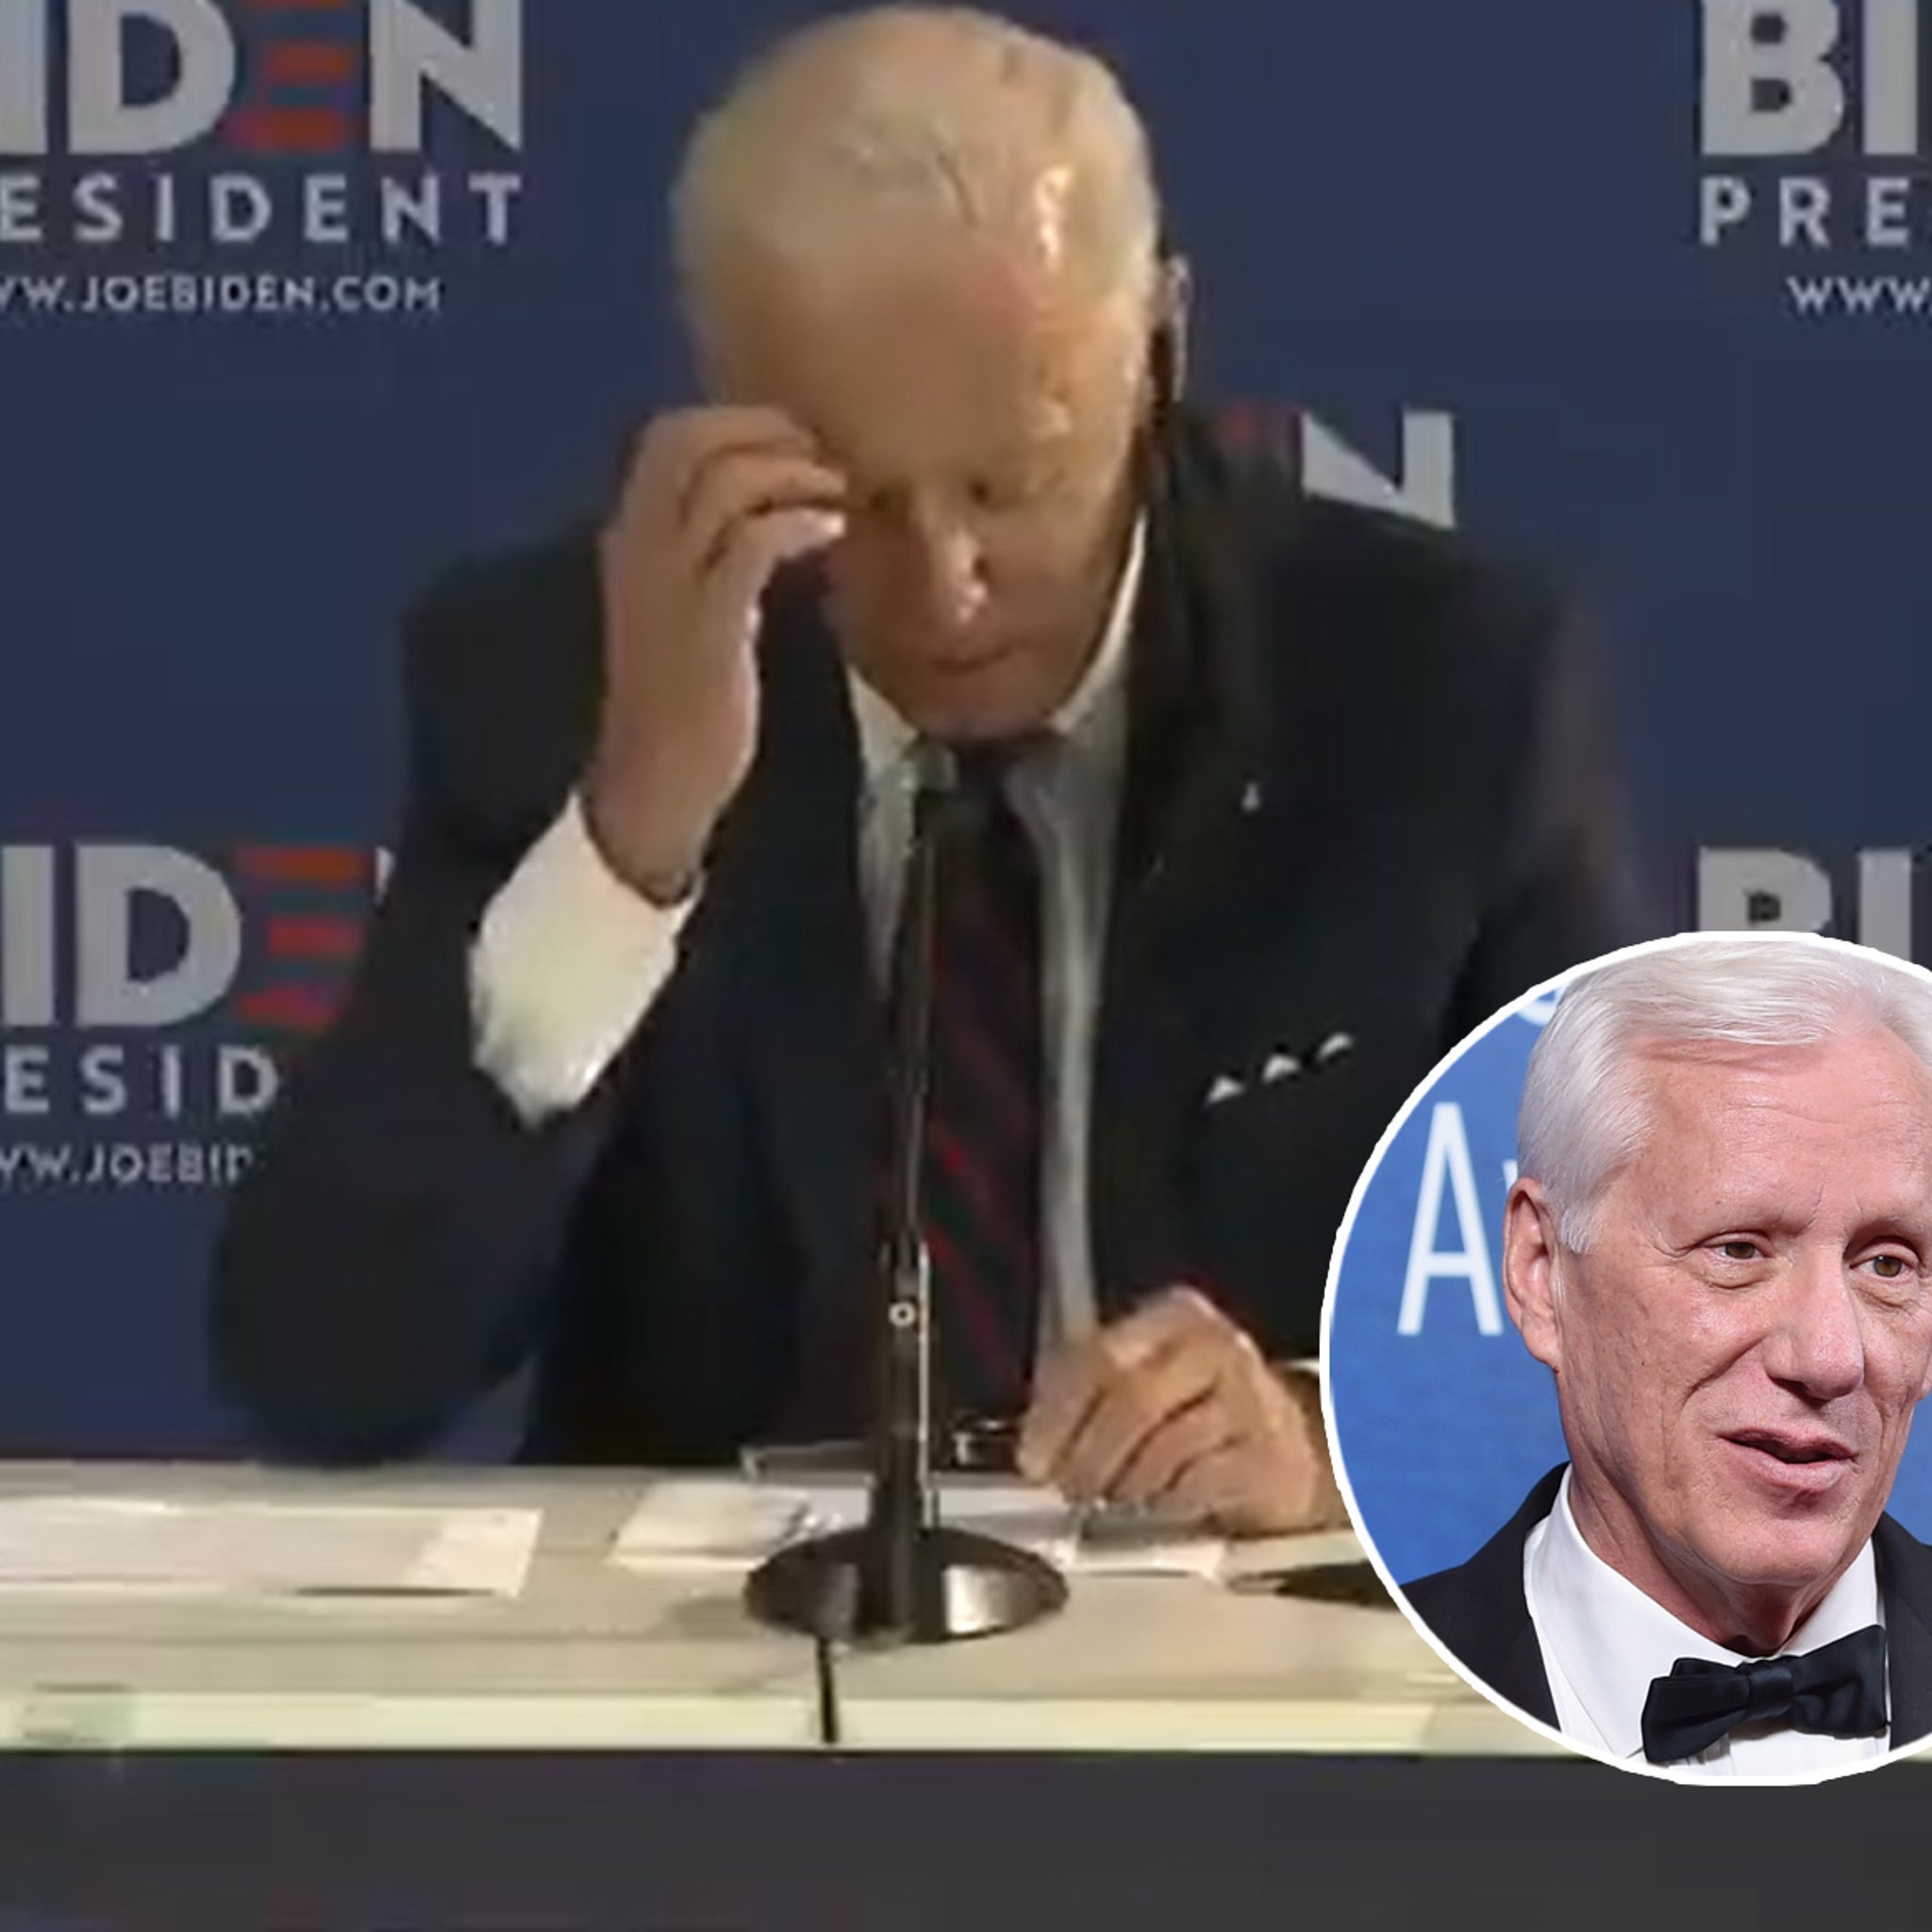 James Woods Doesn't Think Joe Biden Would Last Six Months as Preisdent